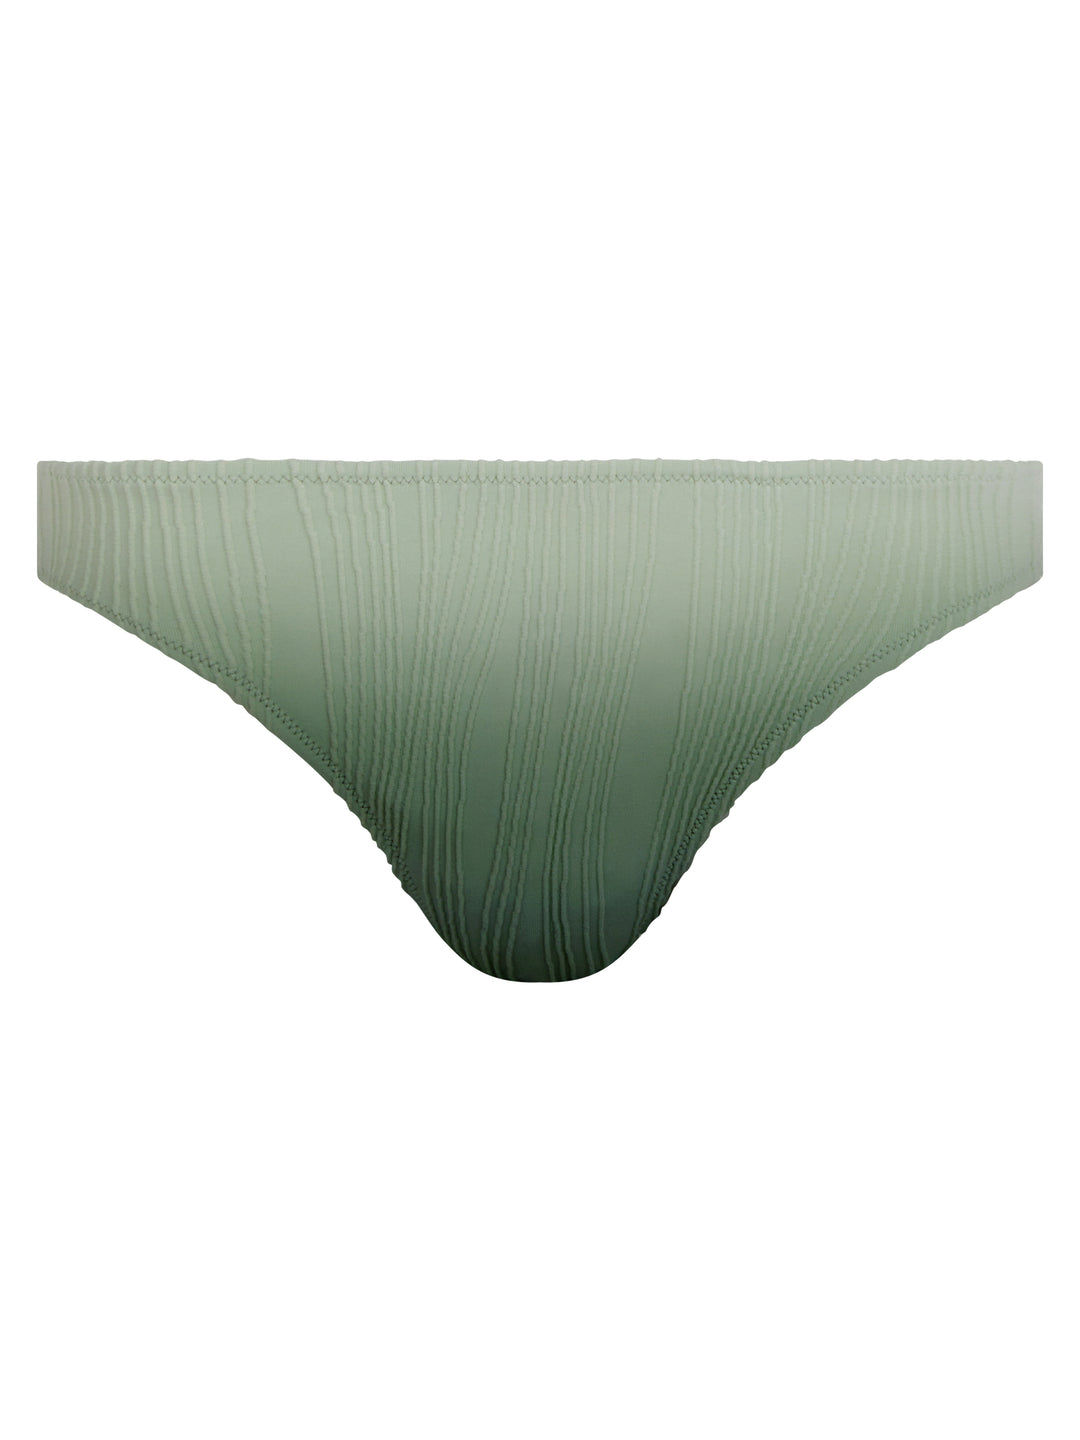 Chantelle Swimwear - Трусики для плавания одного размера, зеленый галстук и краситель